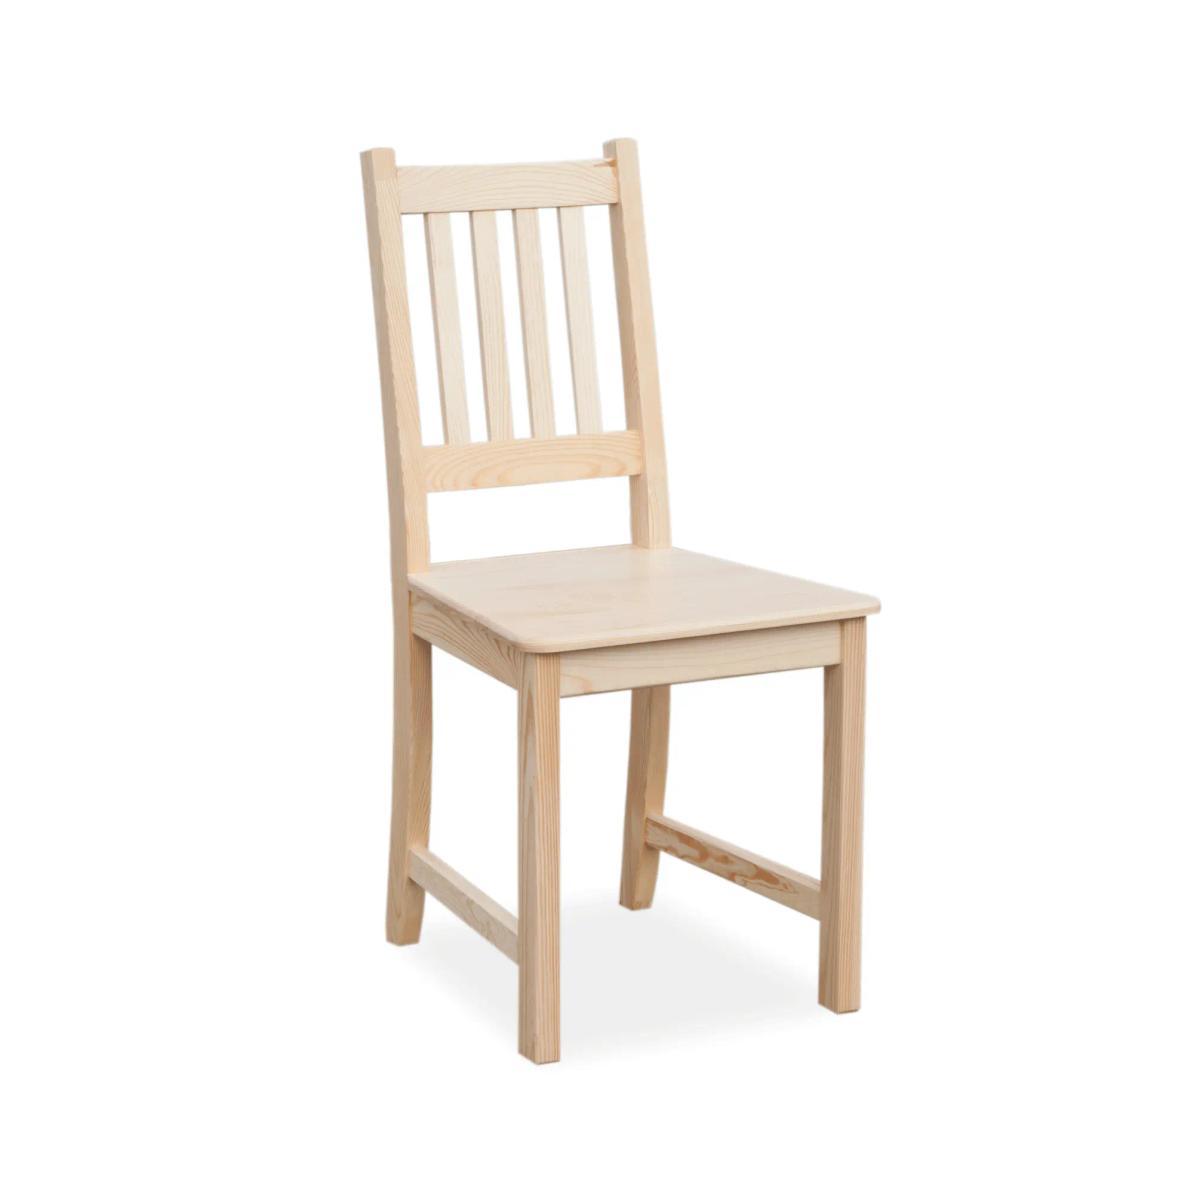 Krzesło drewniane SWC-110 49x87x62 cm do kuchni jadalni sosna naturalne 1 Full Screen